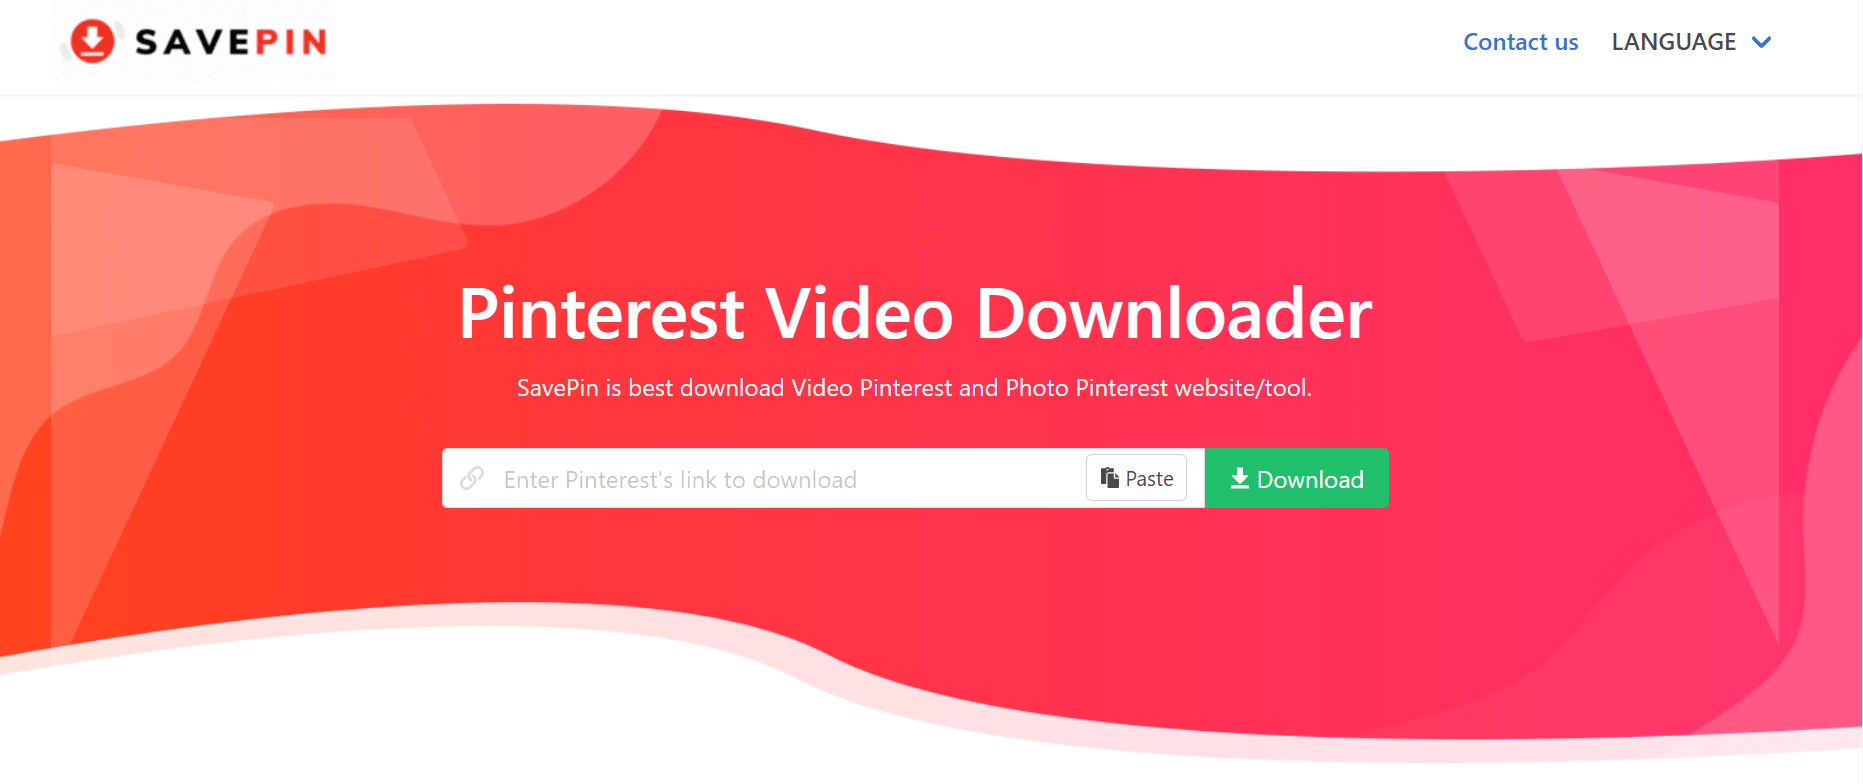 Aplikasi Download Video Pinterest. Unduh Video Dari Pinterest - Download Video Pinterest